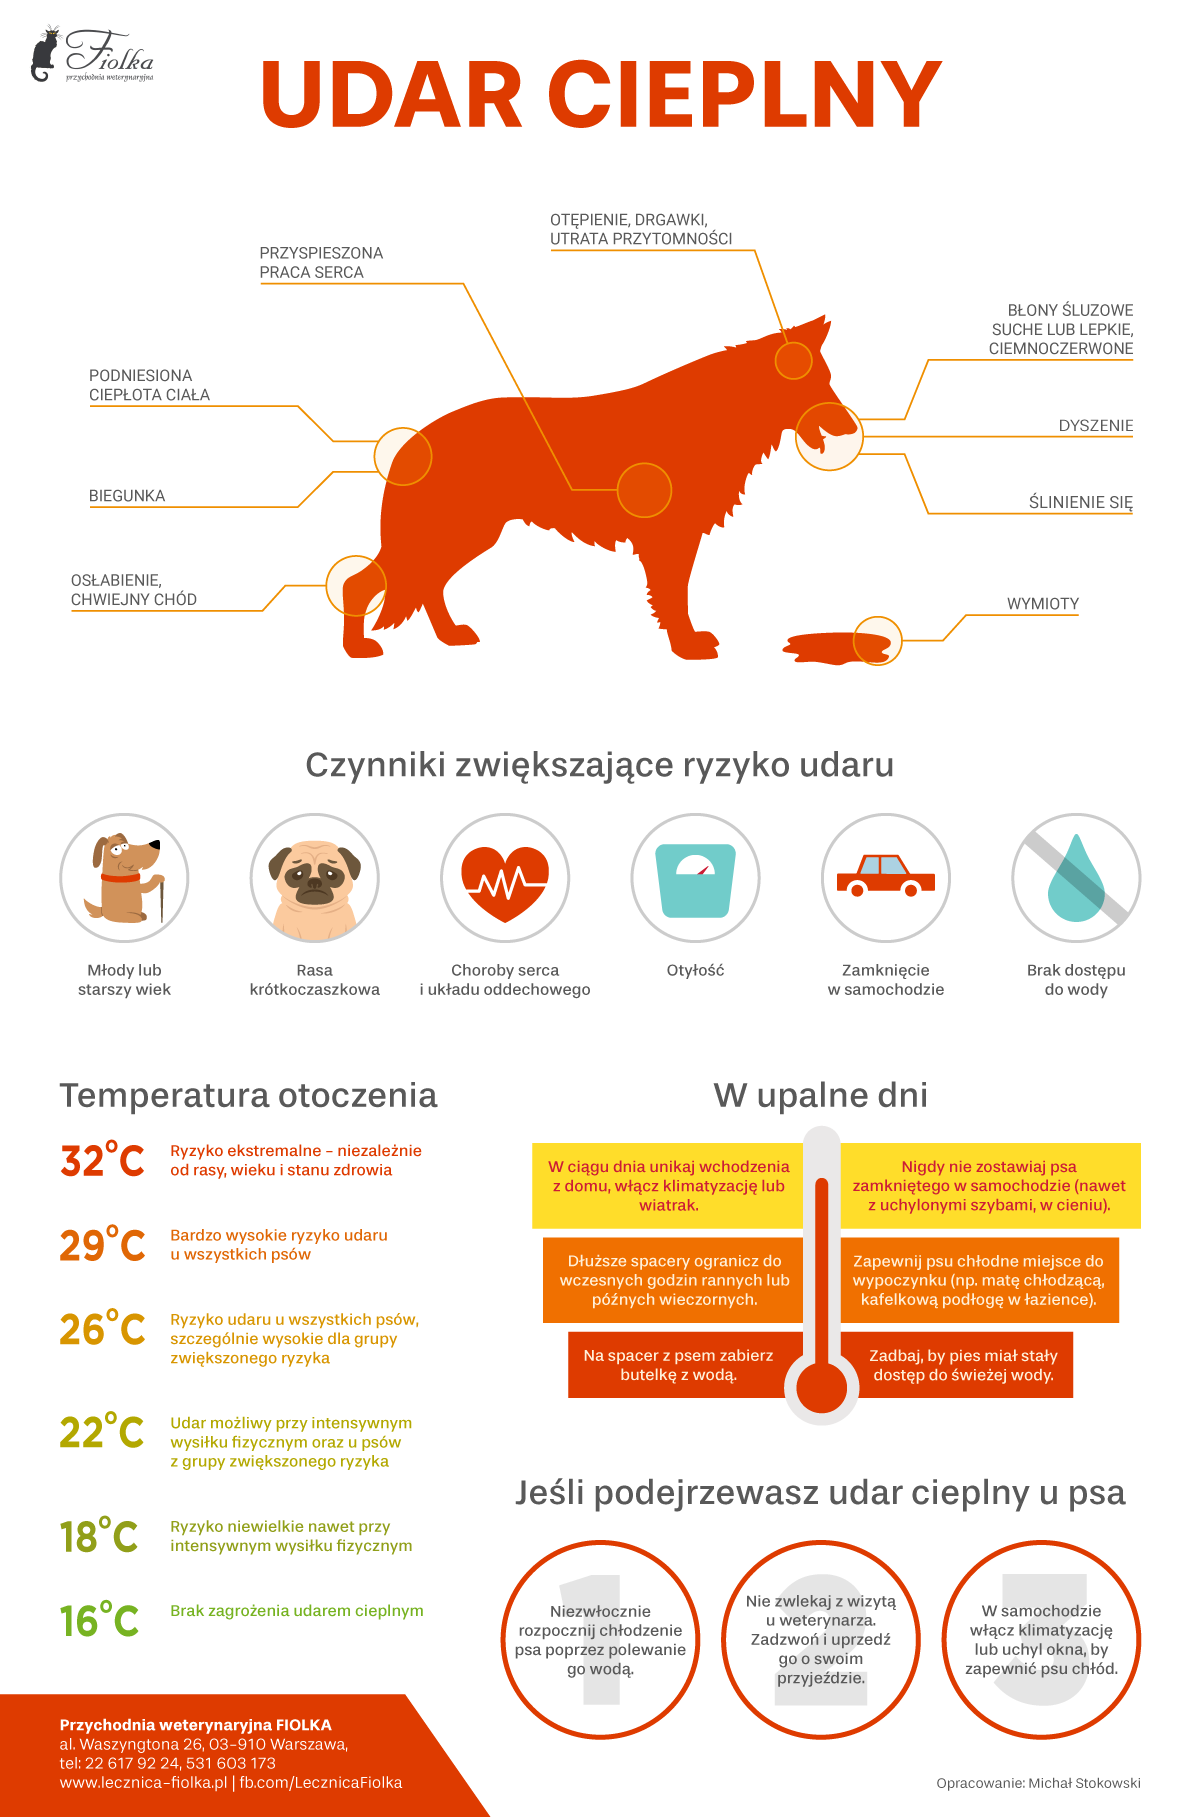 Udar cieplny u psa - infografika